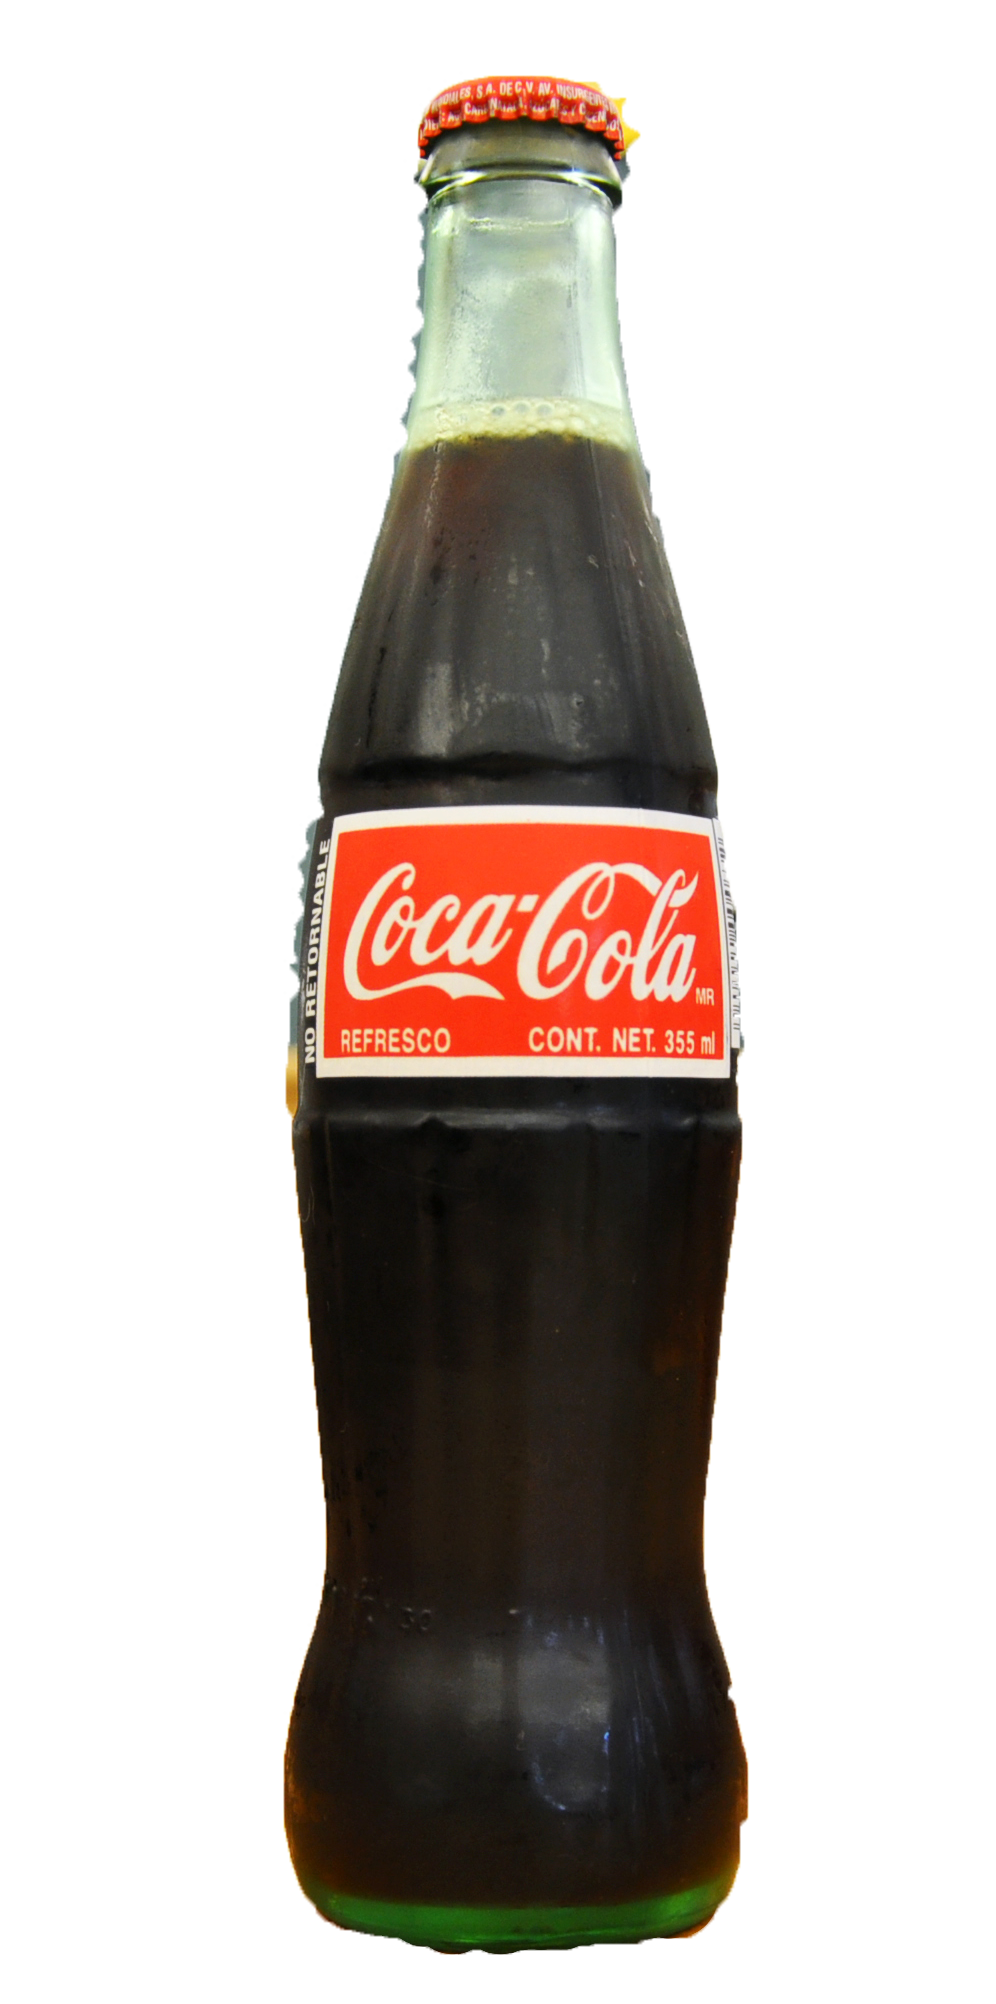 Coca Cola Bottle Png Image PN